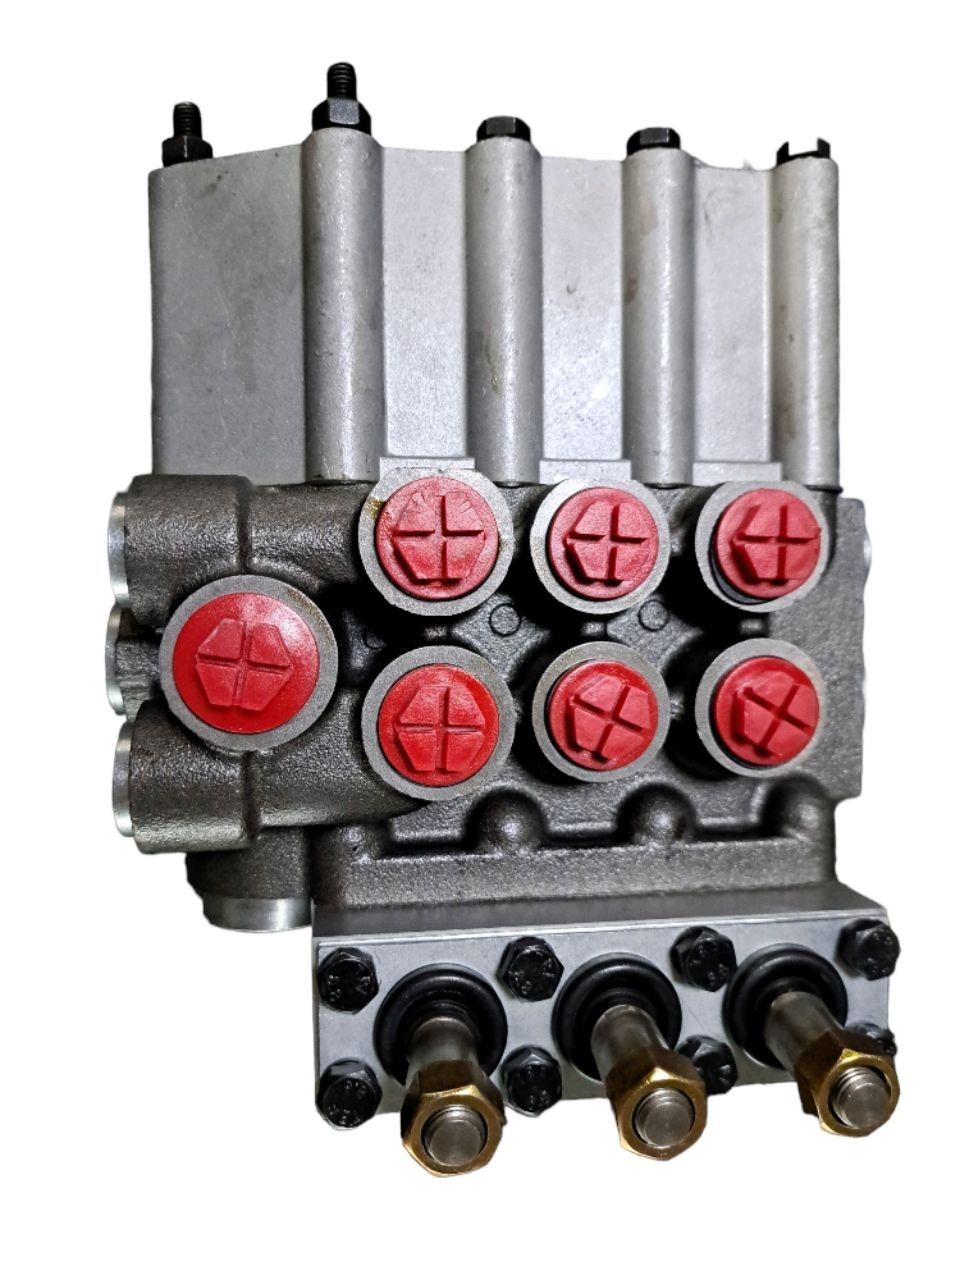 Distribuitor hidraulic R80-3/1-222 TEHM Co. Ltd